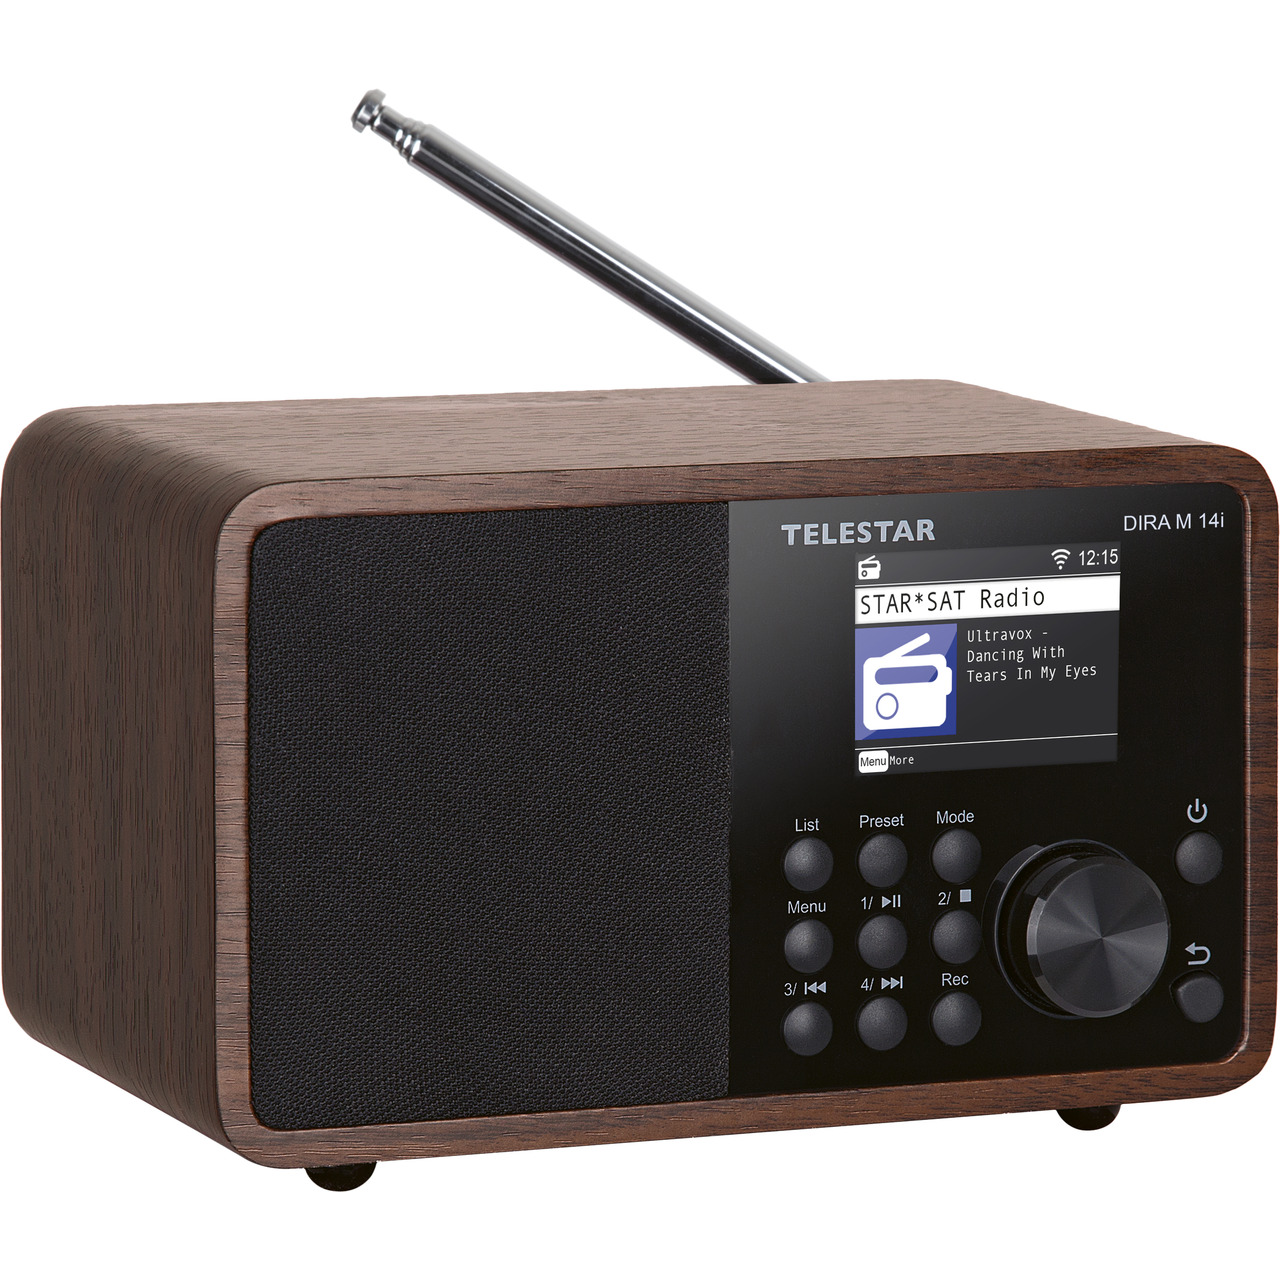 Telestar Hybrid-Digitalradio DIRA M14i- DAB+-UKW- Internetradio- 15-W-RMS- Bluetooth- Holz-Dekor unter Multimedia